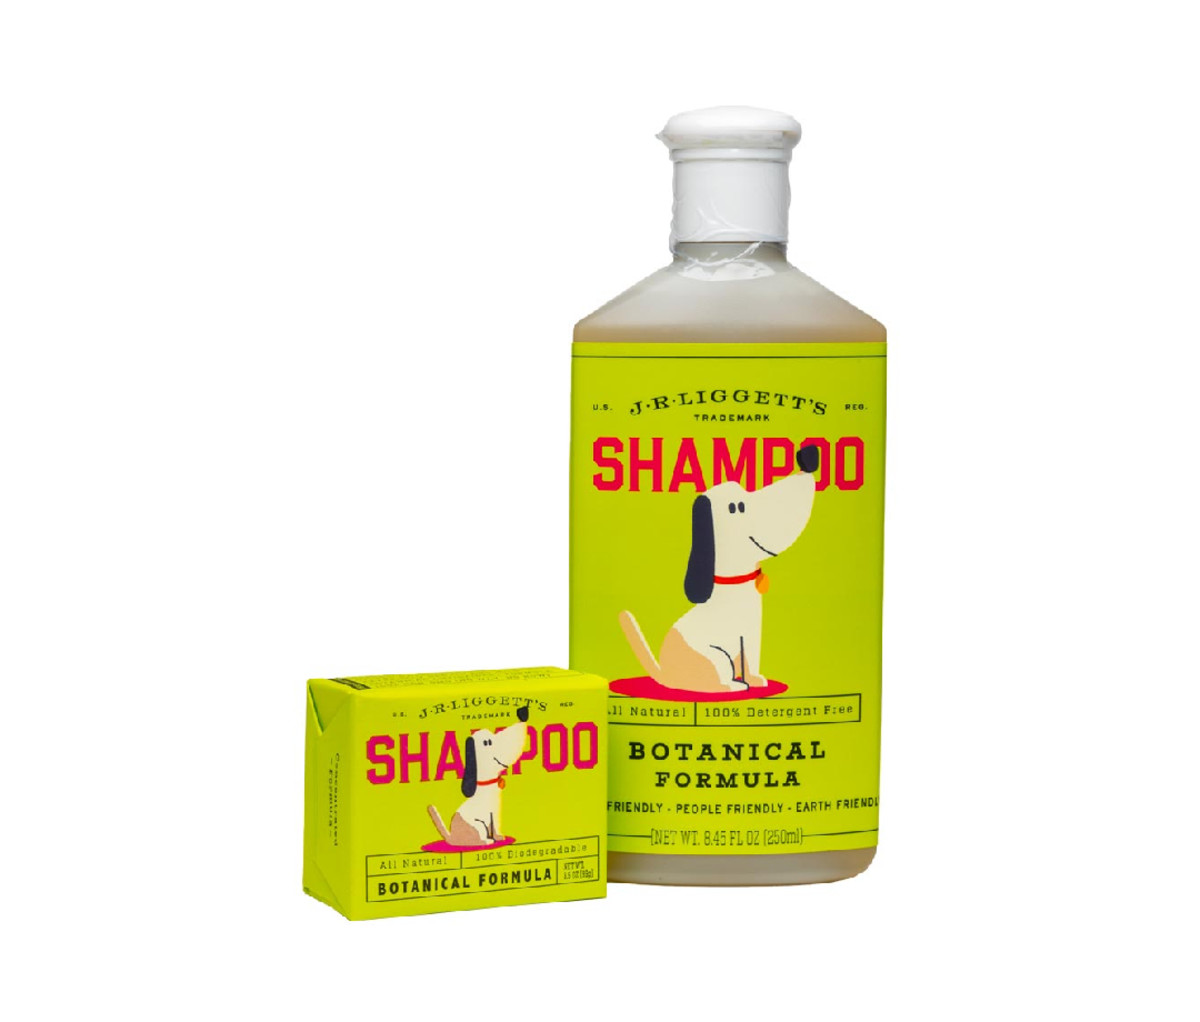 https://www.mensjournal.com/.image/t_share/MTk5OTg5NjY4MjcwMzE4NzAw/jr-liggett-dog-shampoo.jpg